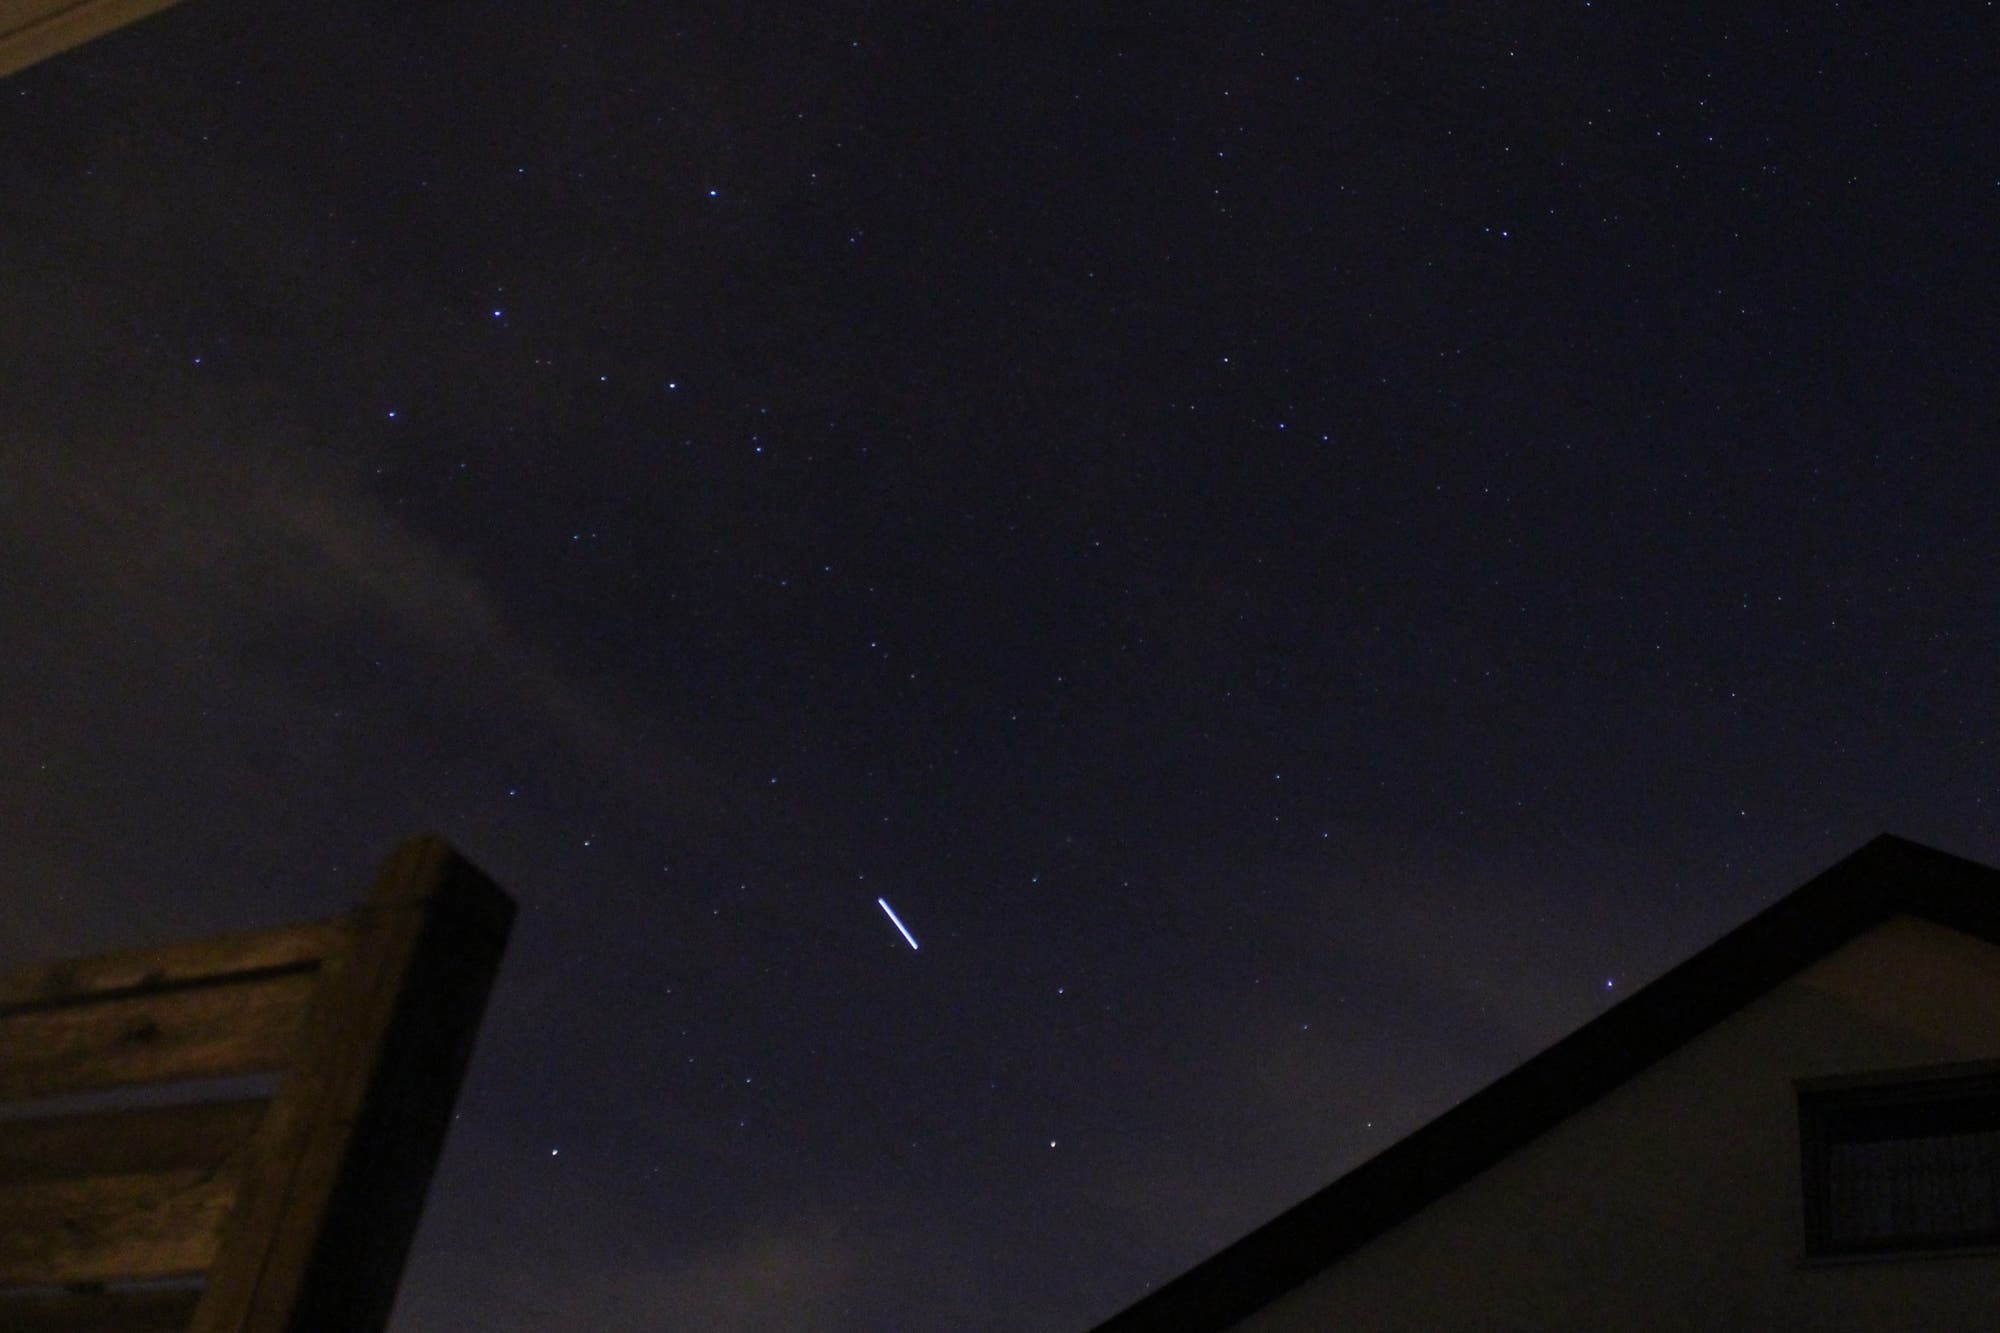 ISS im Sternbild Andromeda